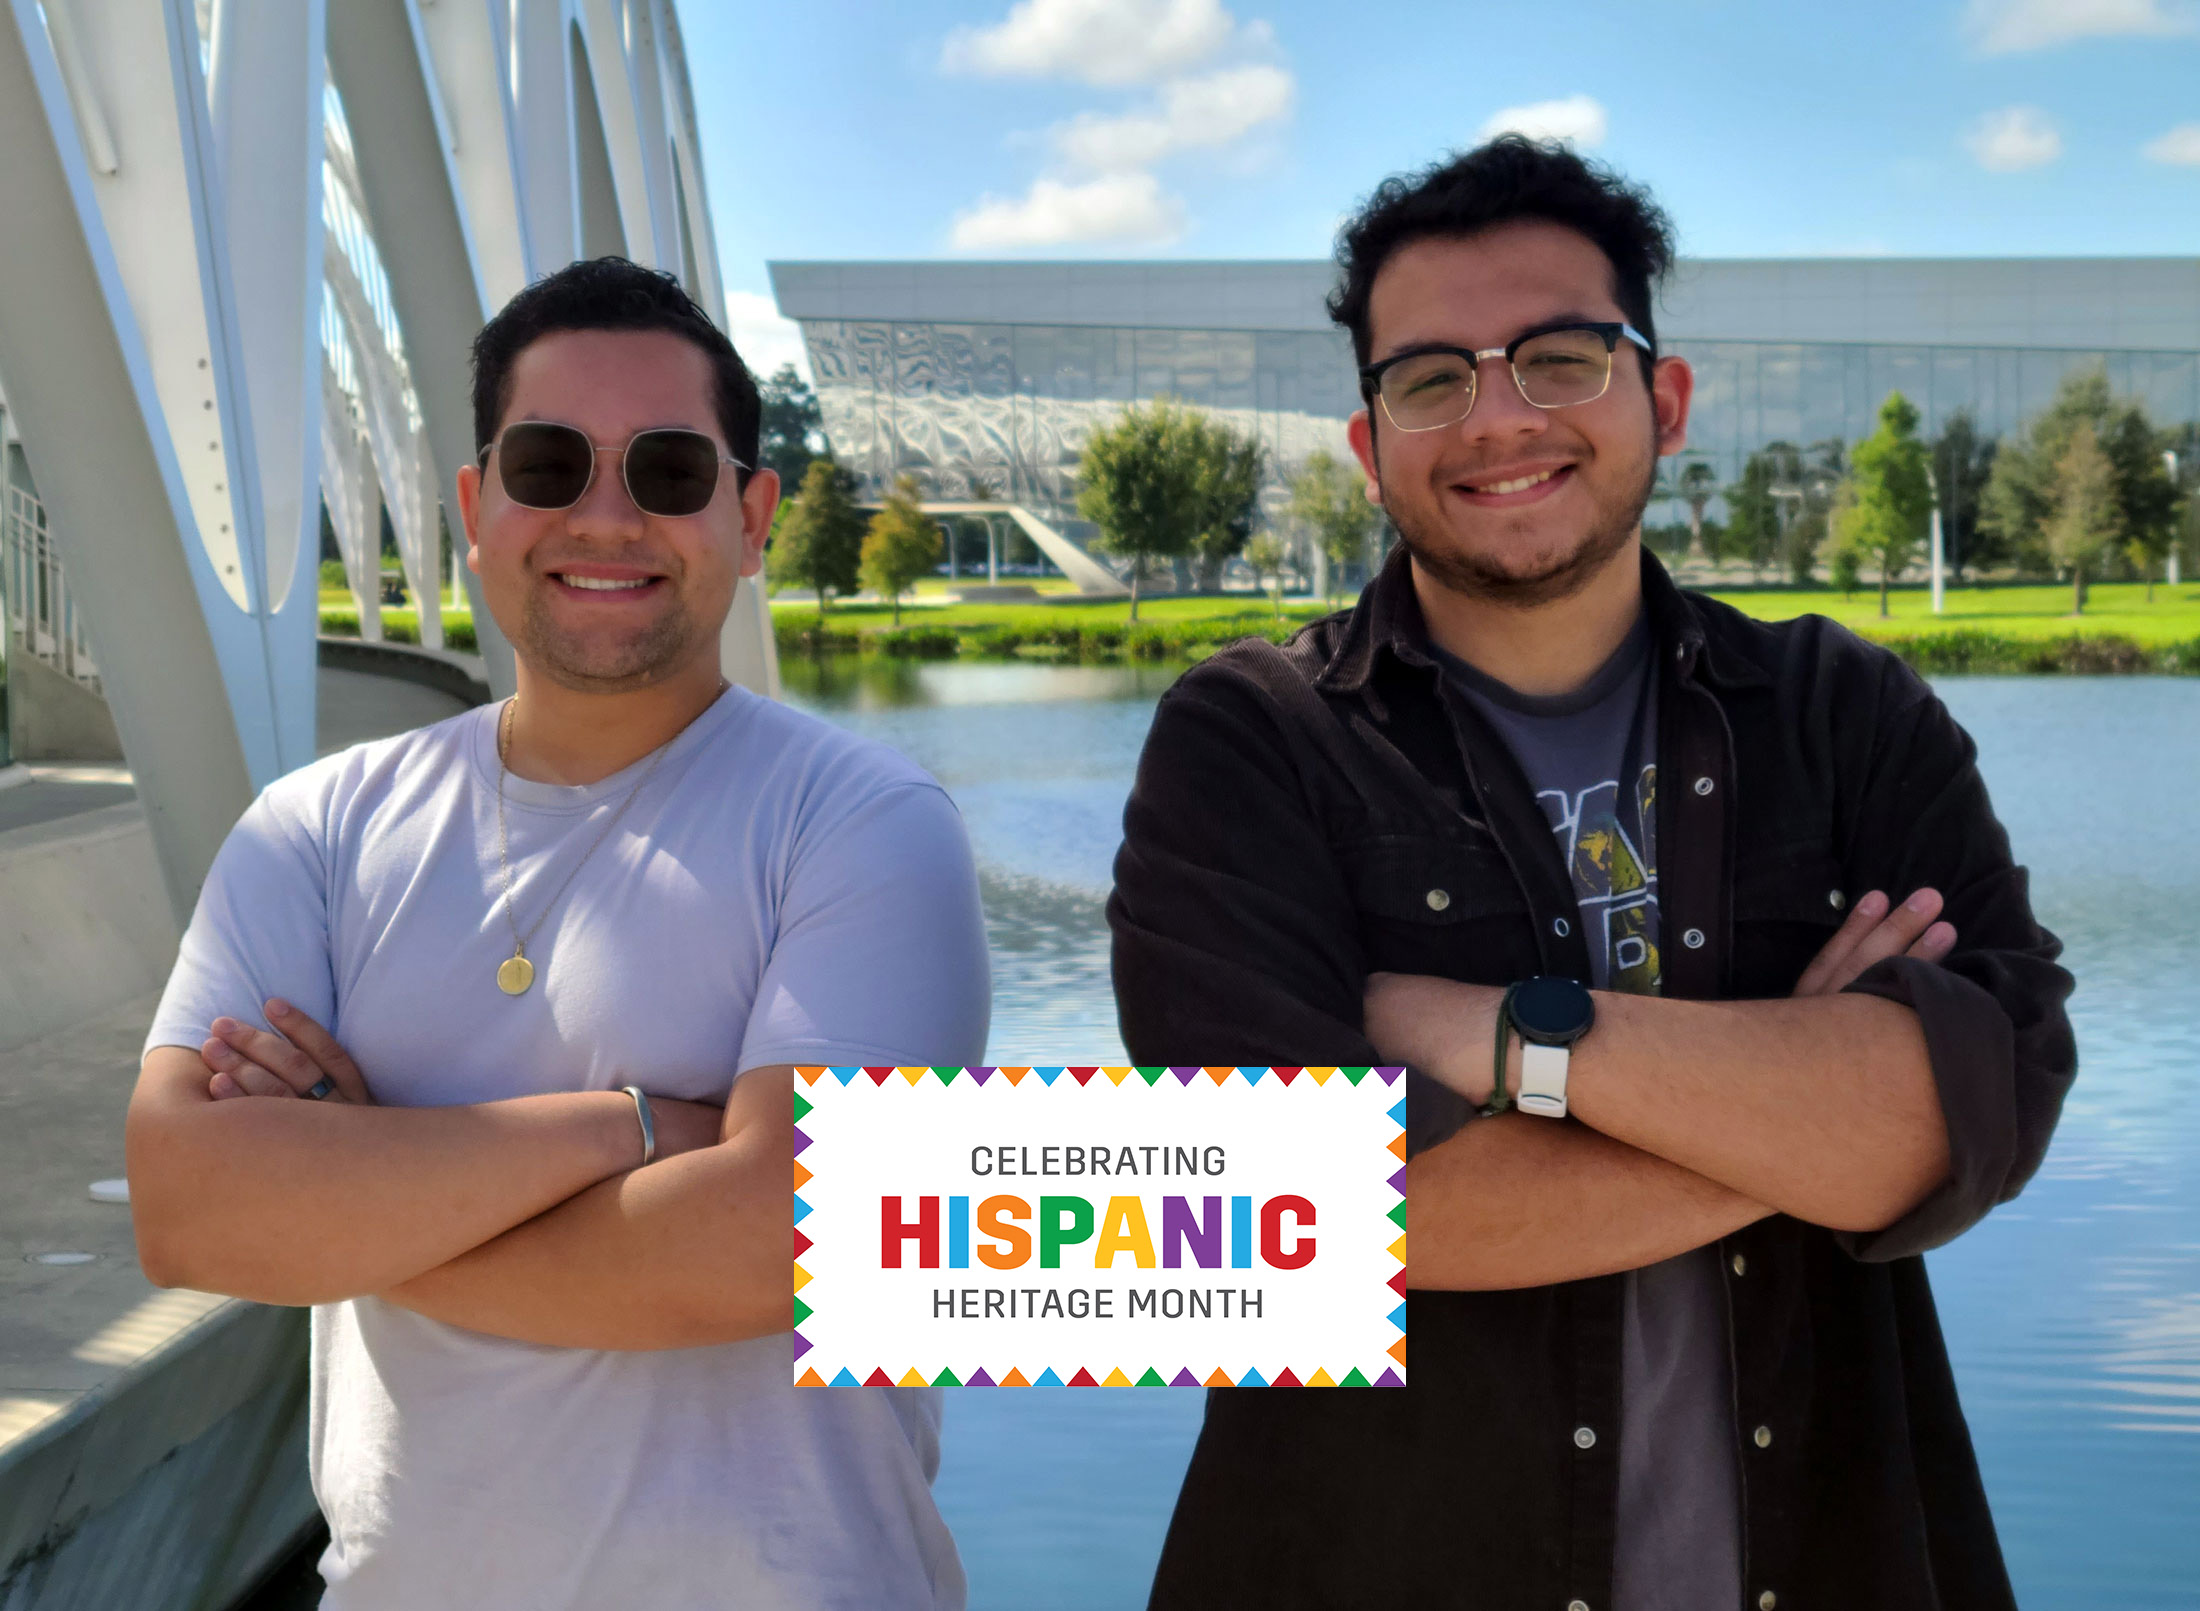 LASA leadership helps Hispanic students thrive